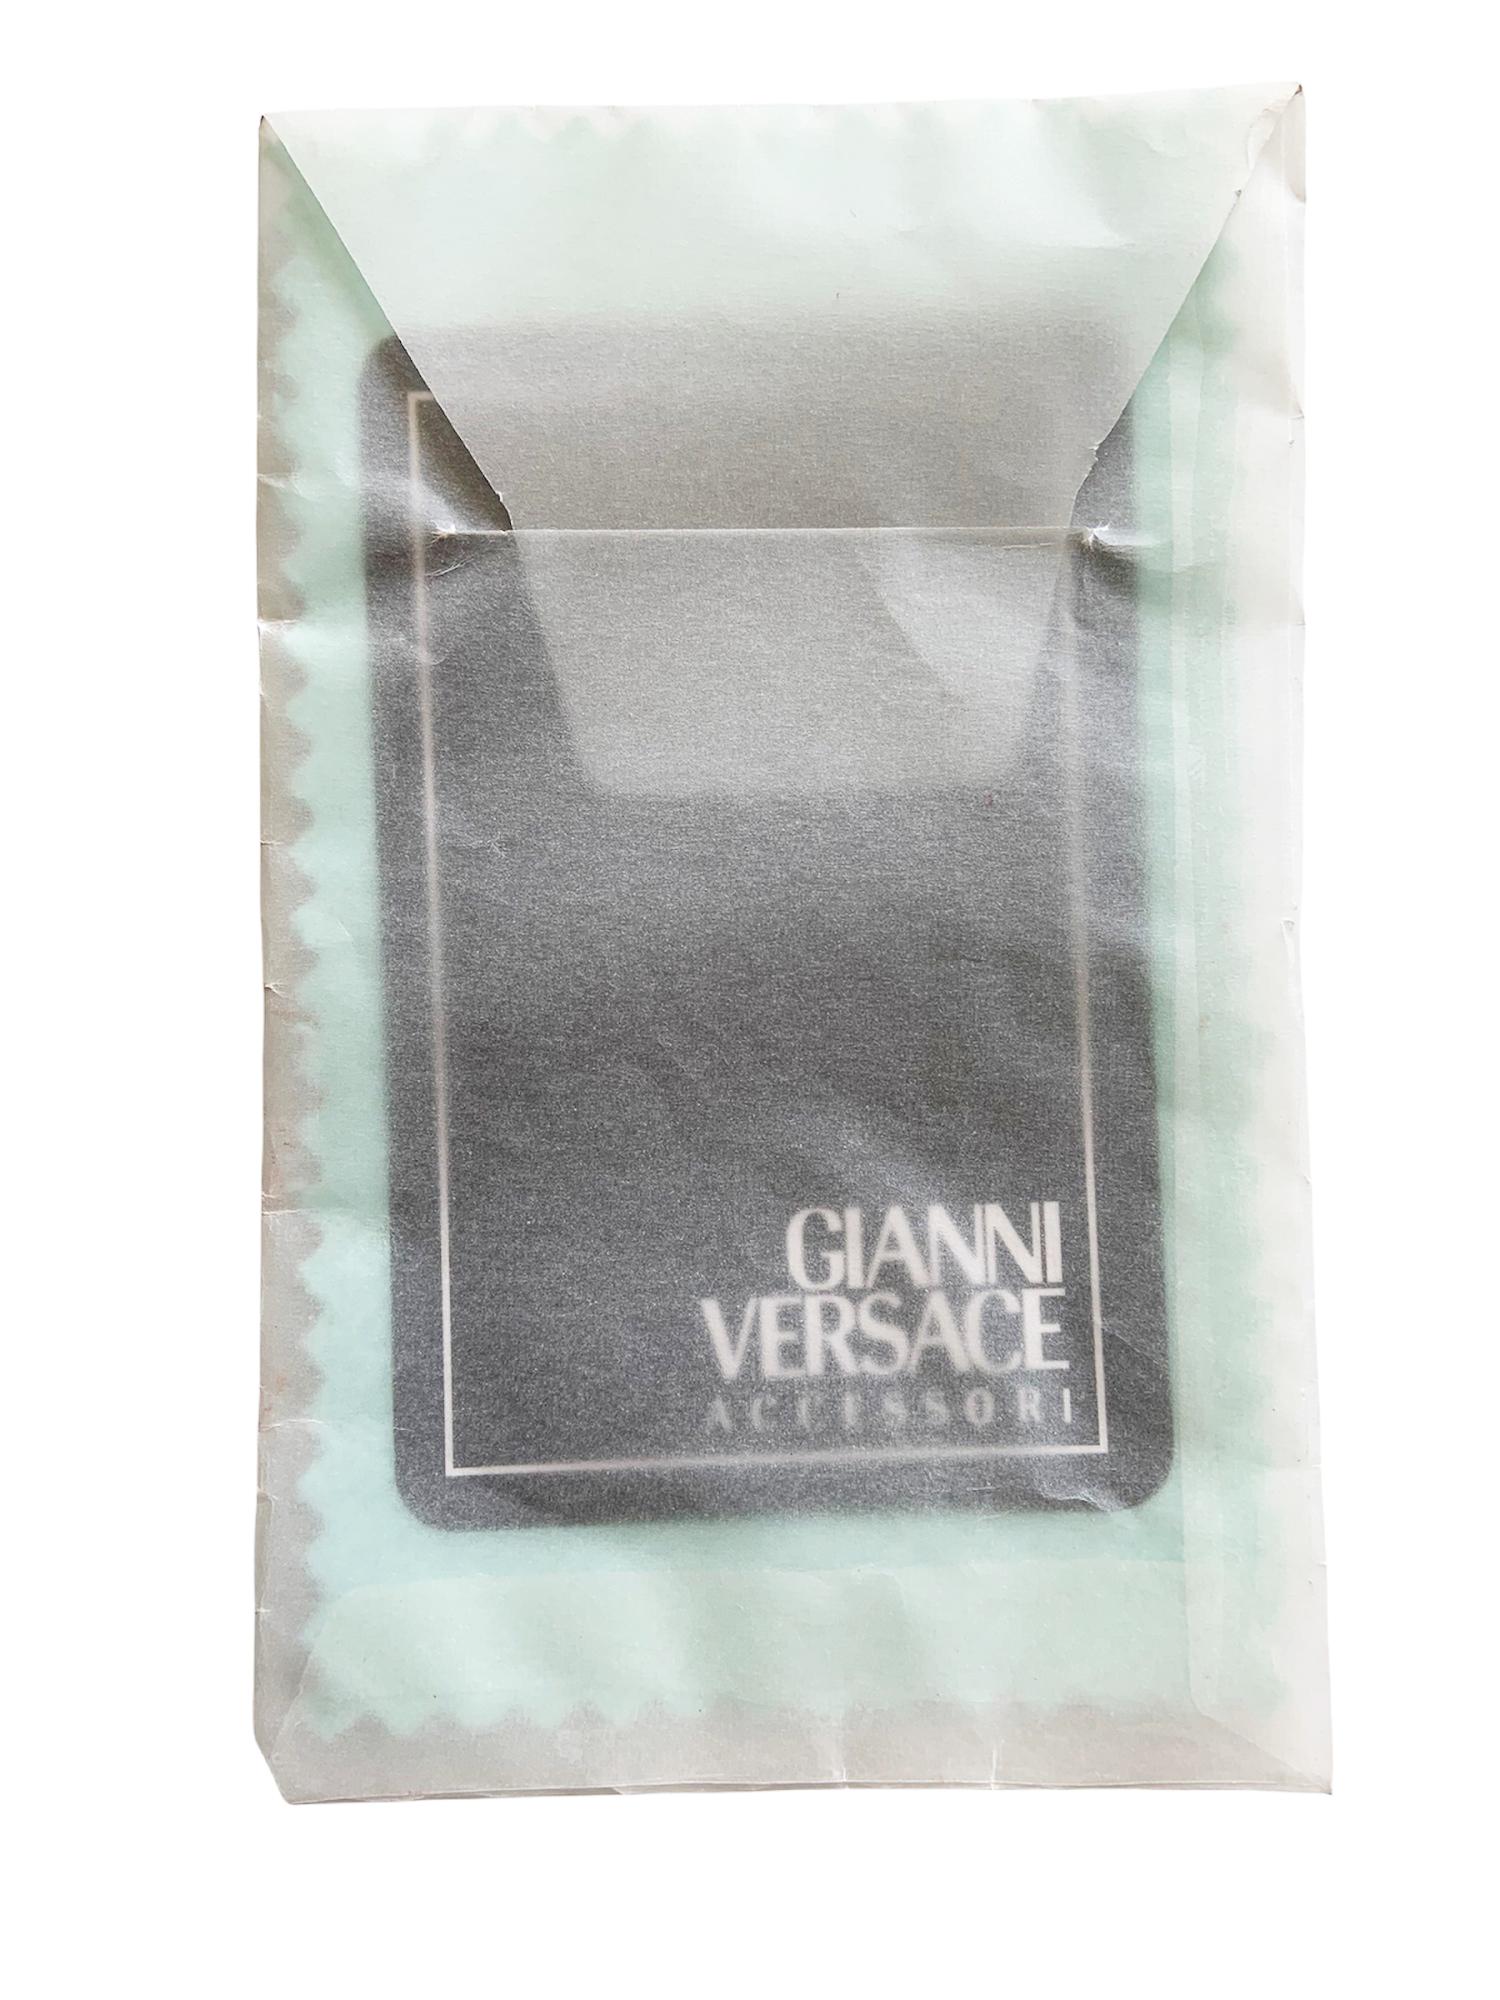 Vintage Gianni Versace S/S 1991 Matching Jeweled 3 pc Set - Bag + Belt + Shoes 8